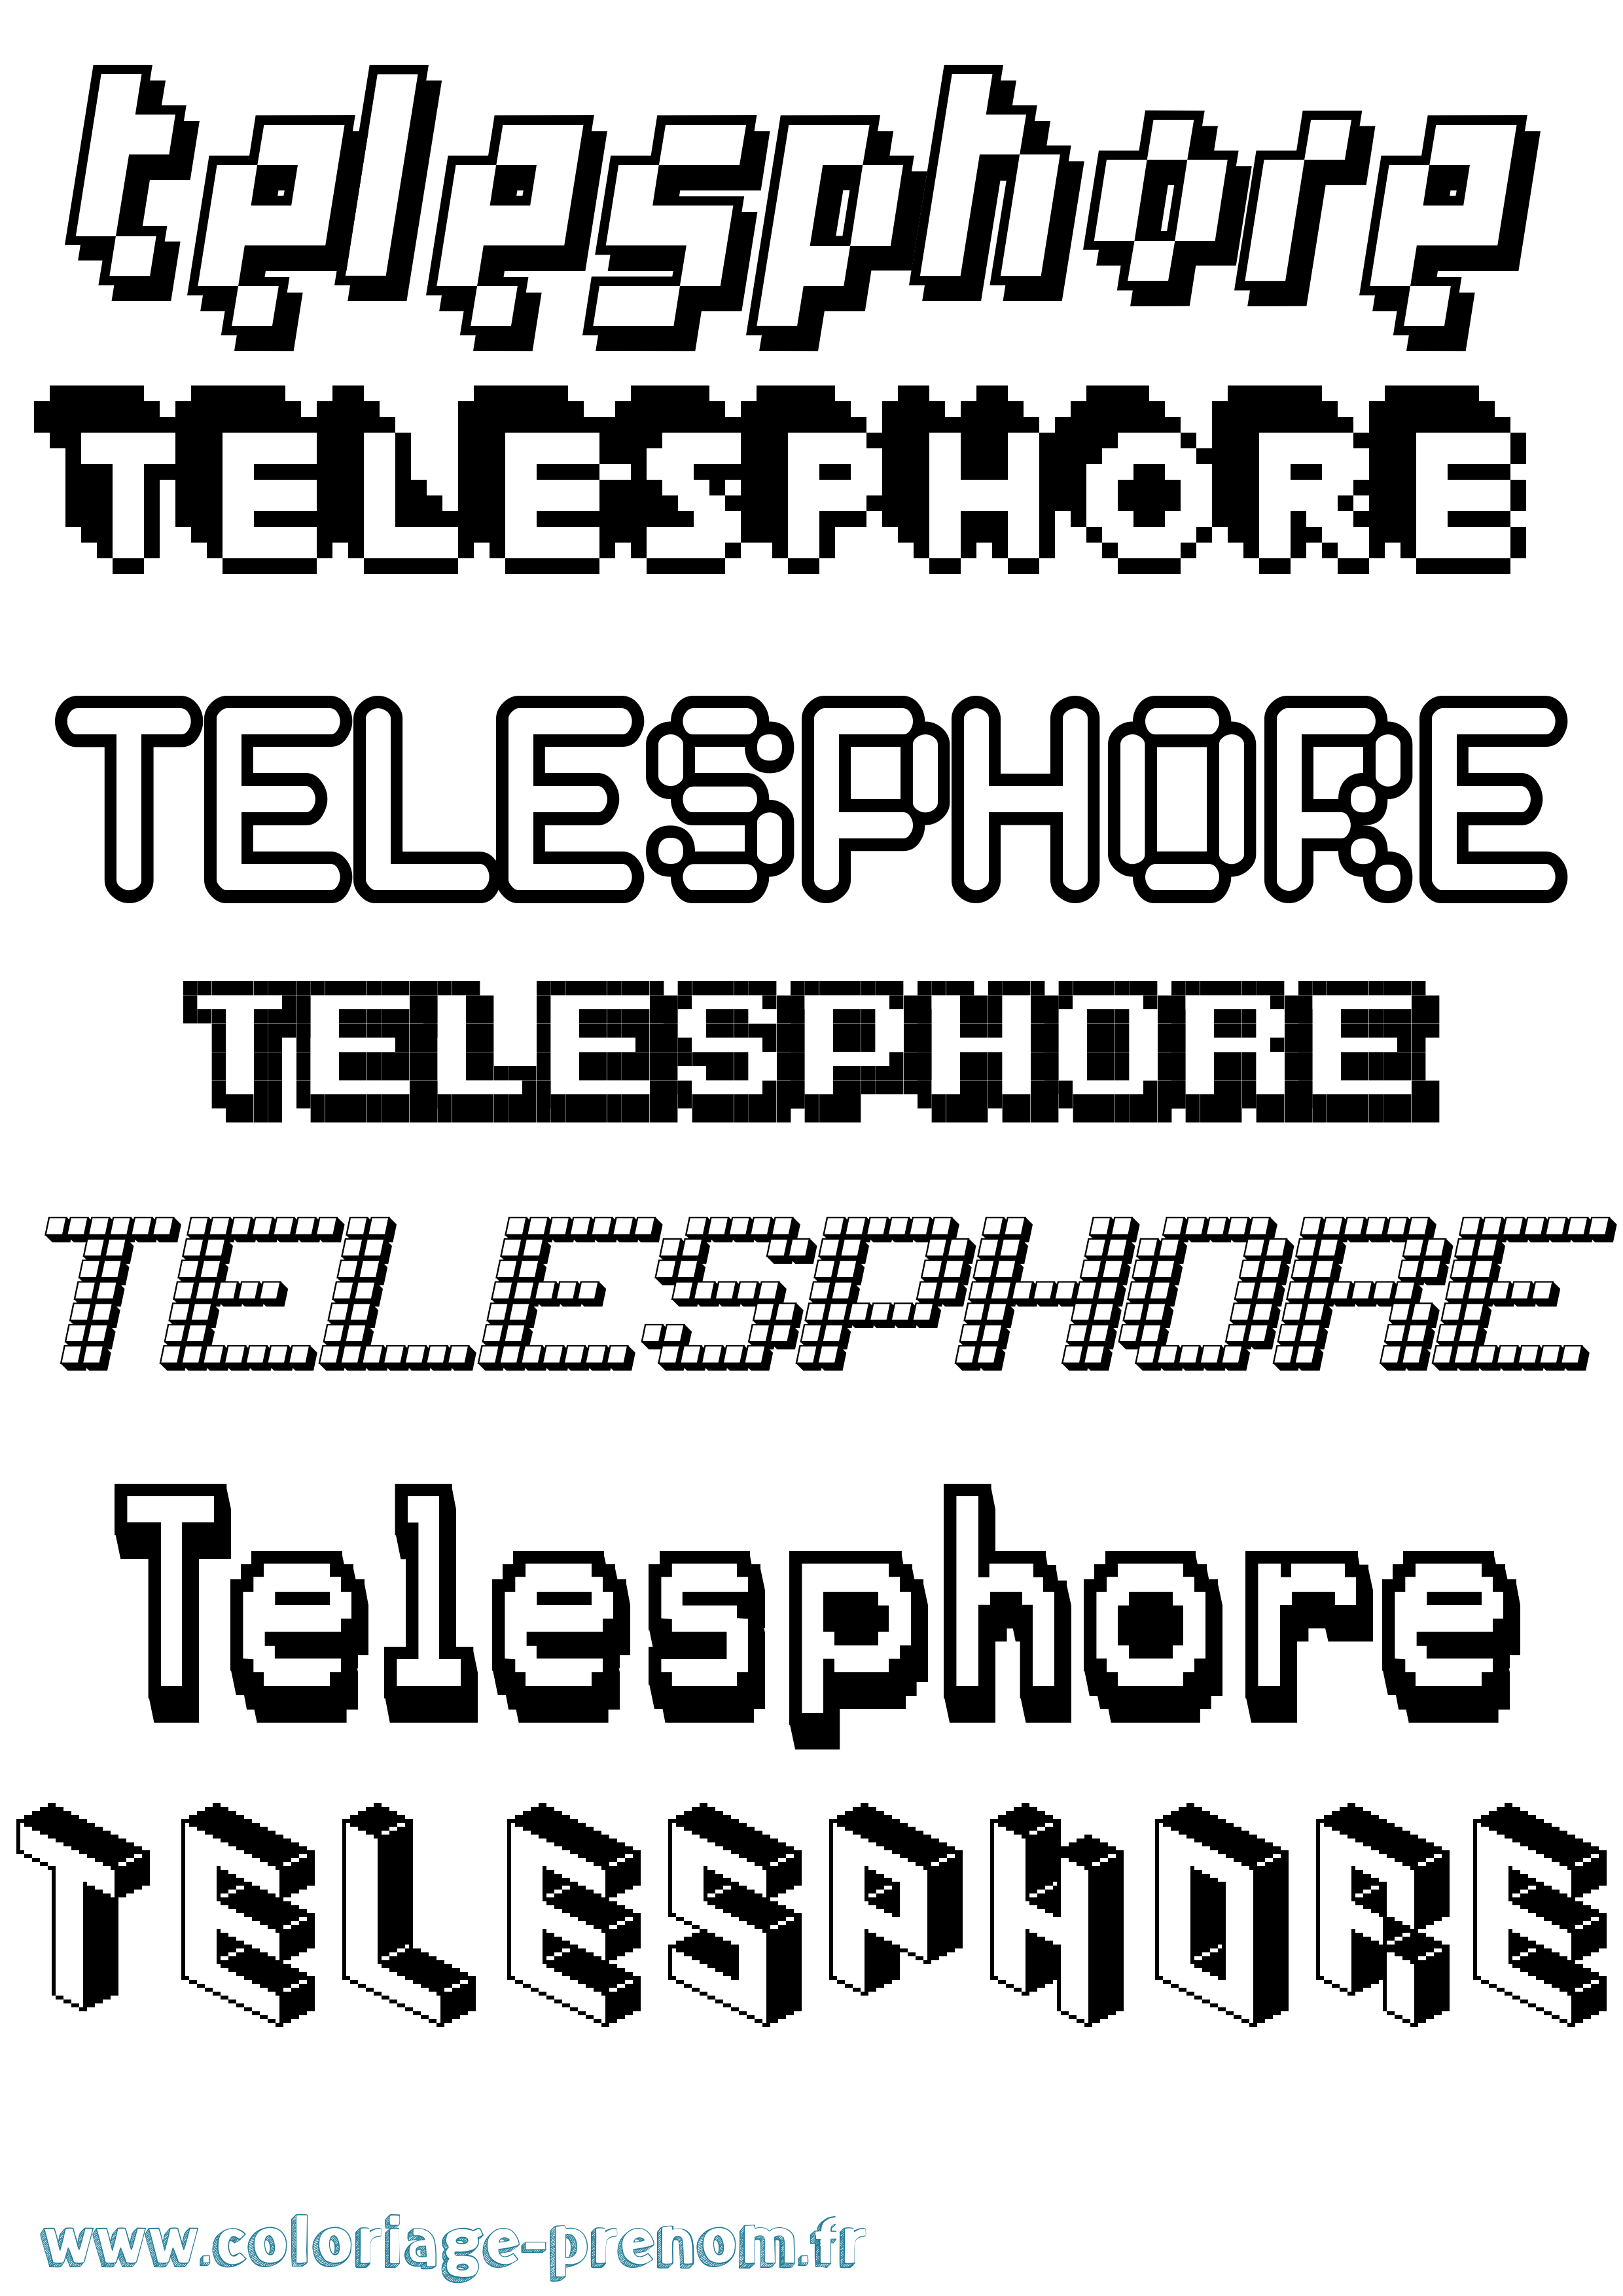 Coloriage prénom Telesphore Pixel